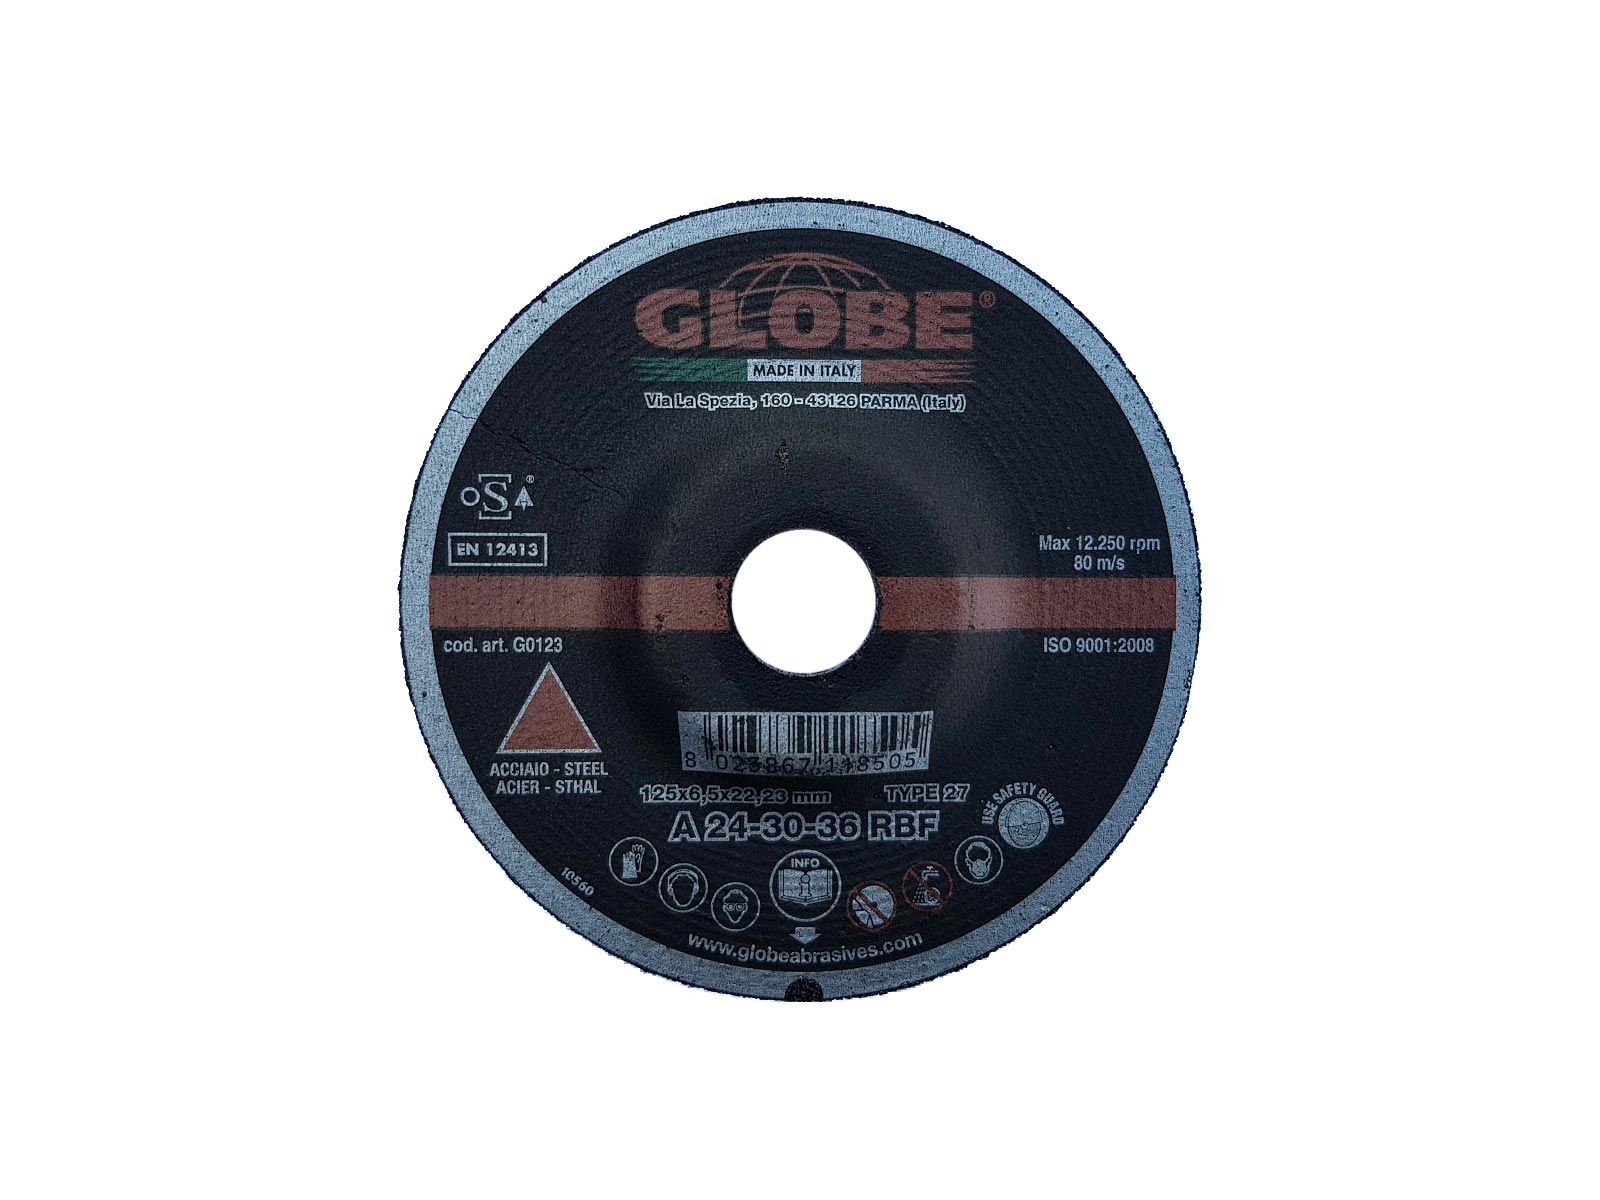 Discuri de polizare - Disc A 24-30-36 RBF 125x6,5x22,23 T27, oldindustry.ro